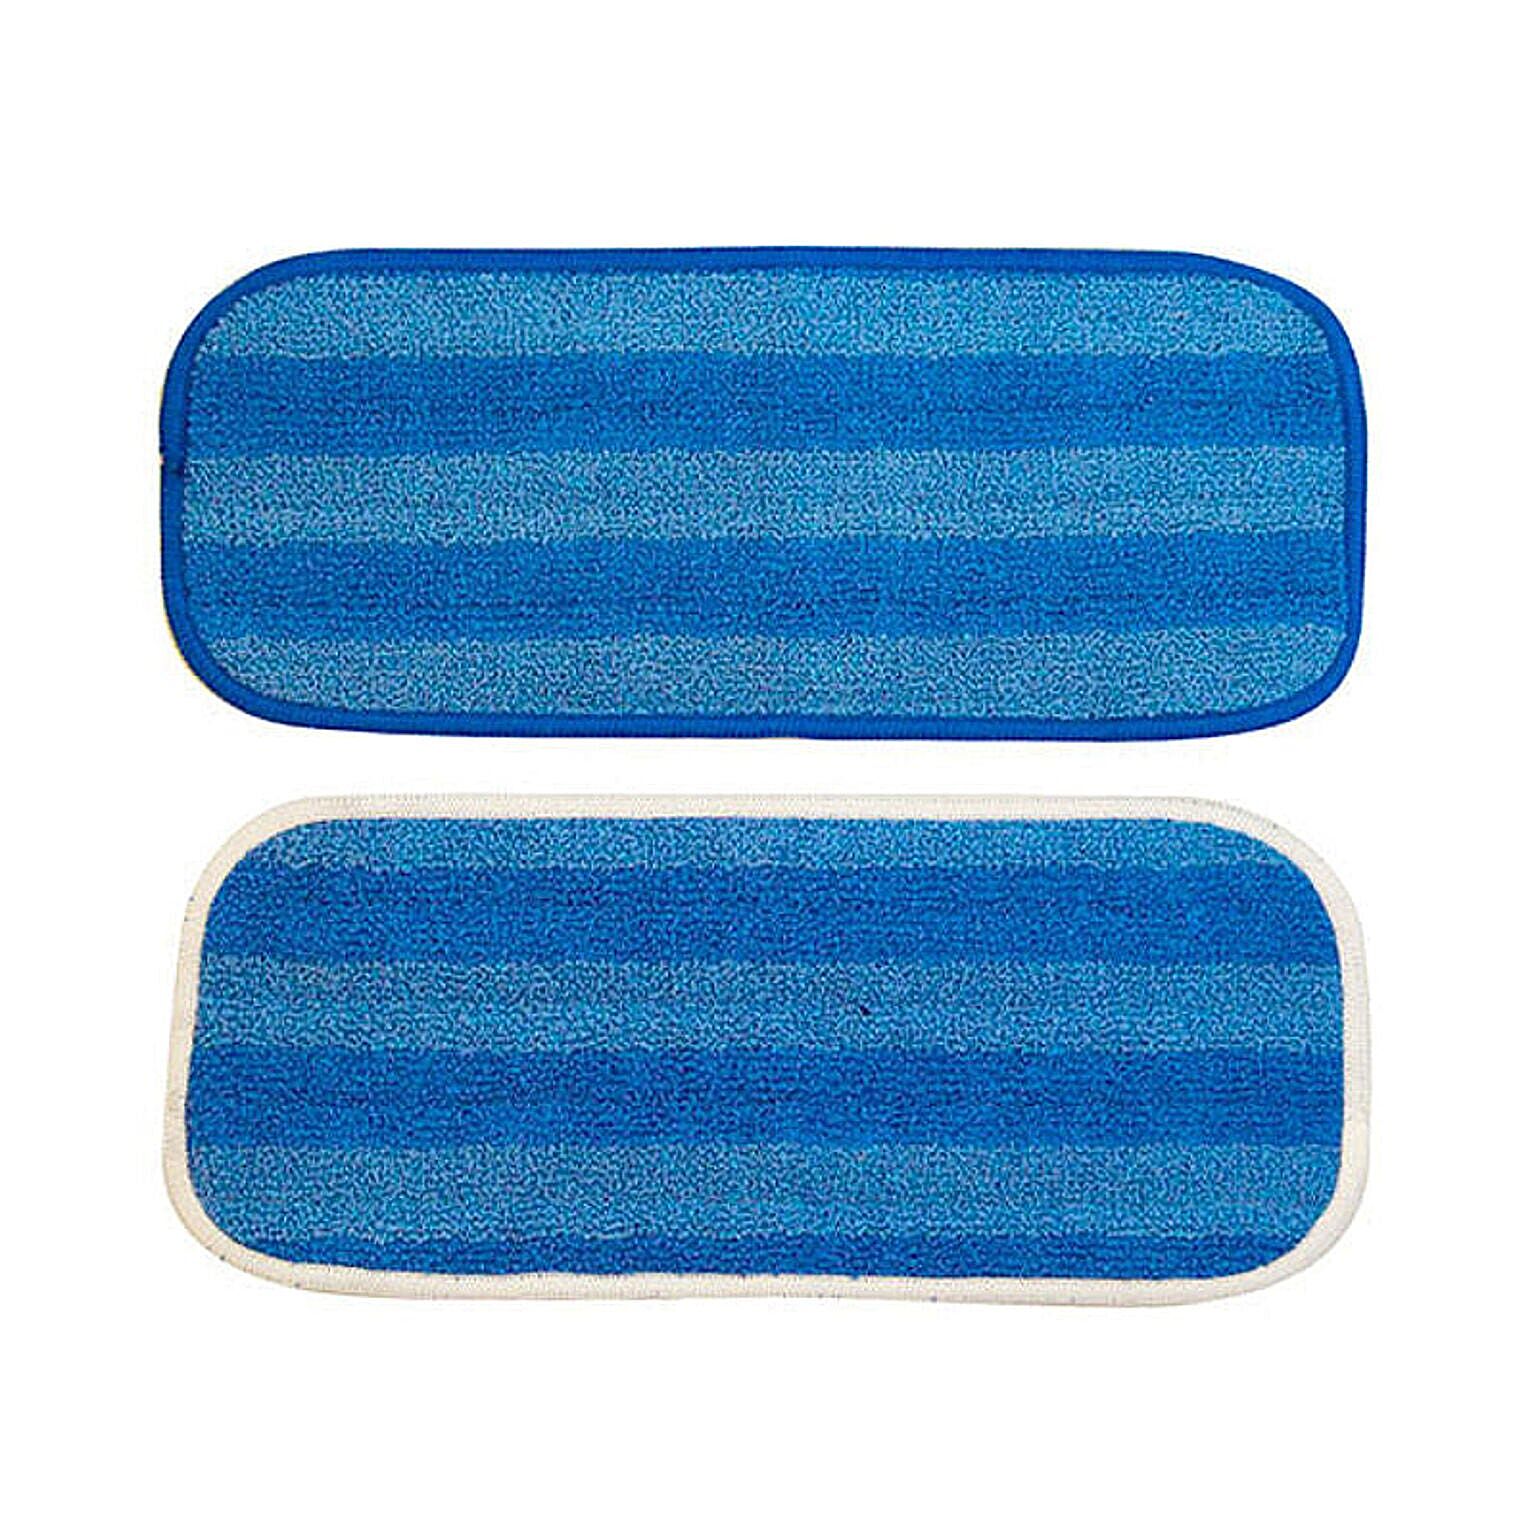 MQプレミアムモップ30cm交換用 2色セット (ブルー・ホワイト) MQpm0201